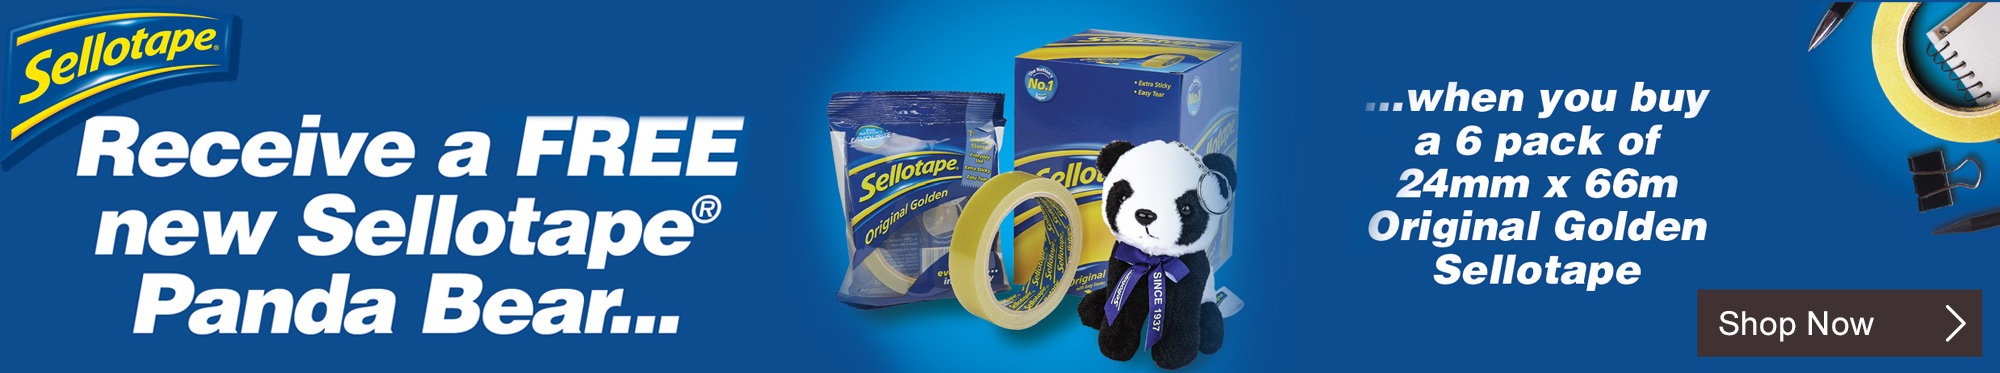 Receive a FREE Sellotape Panda Bear when you buy a 6 pack of Original Golden Sellotape